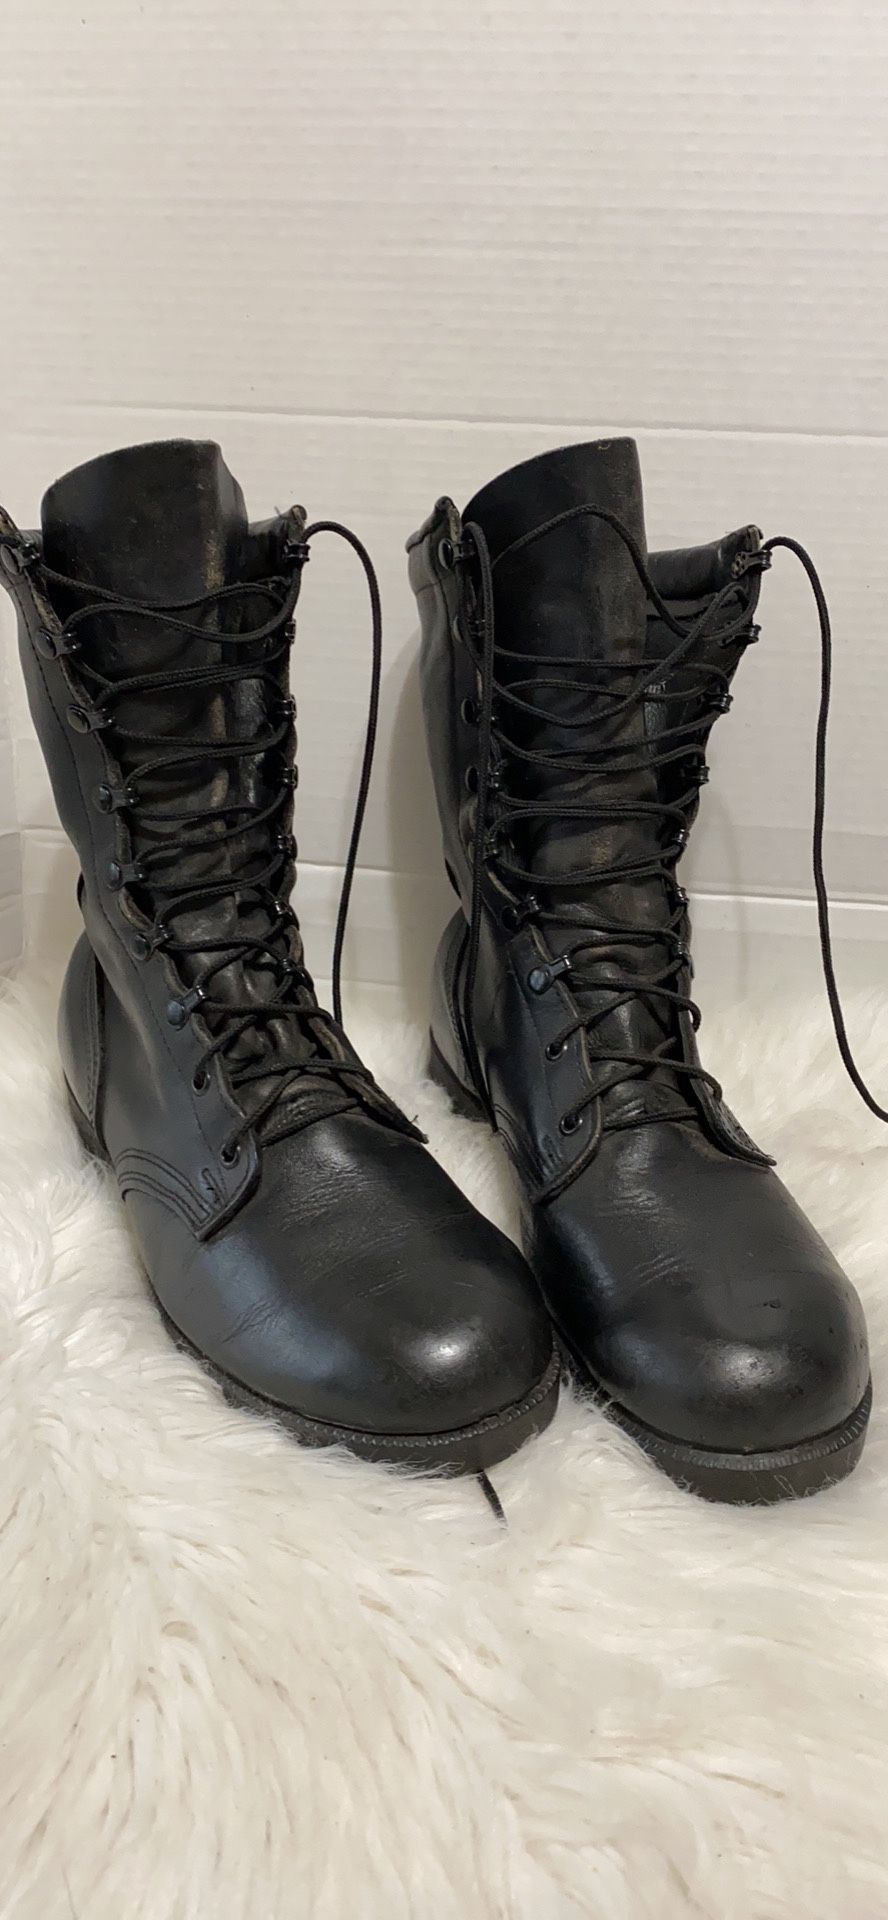 Men work combat boots size 10 wide